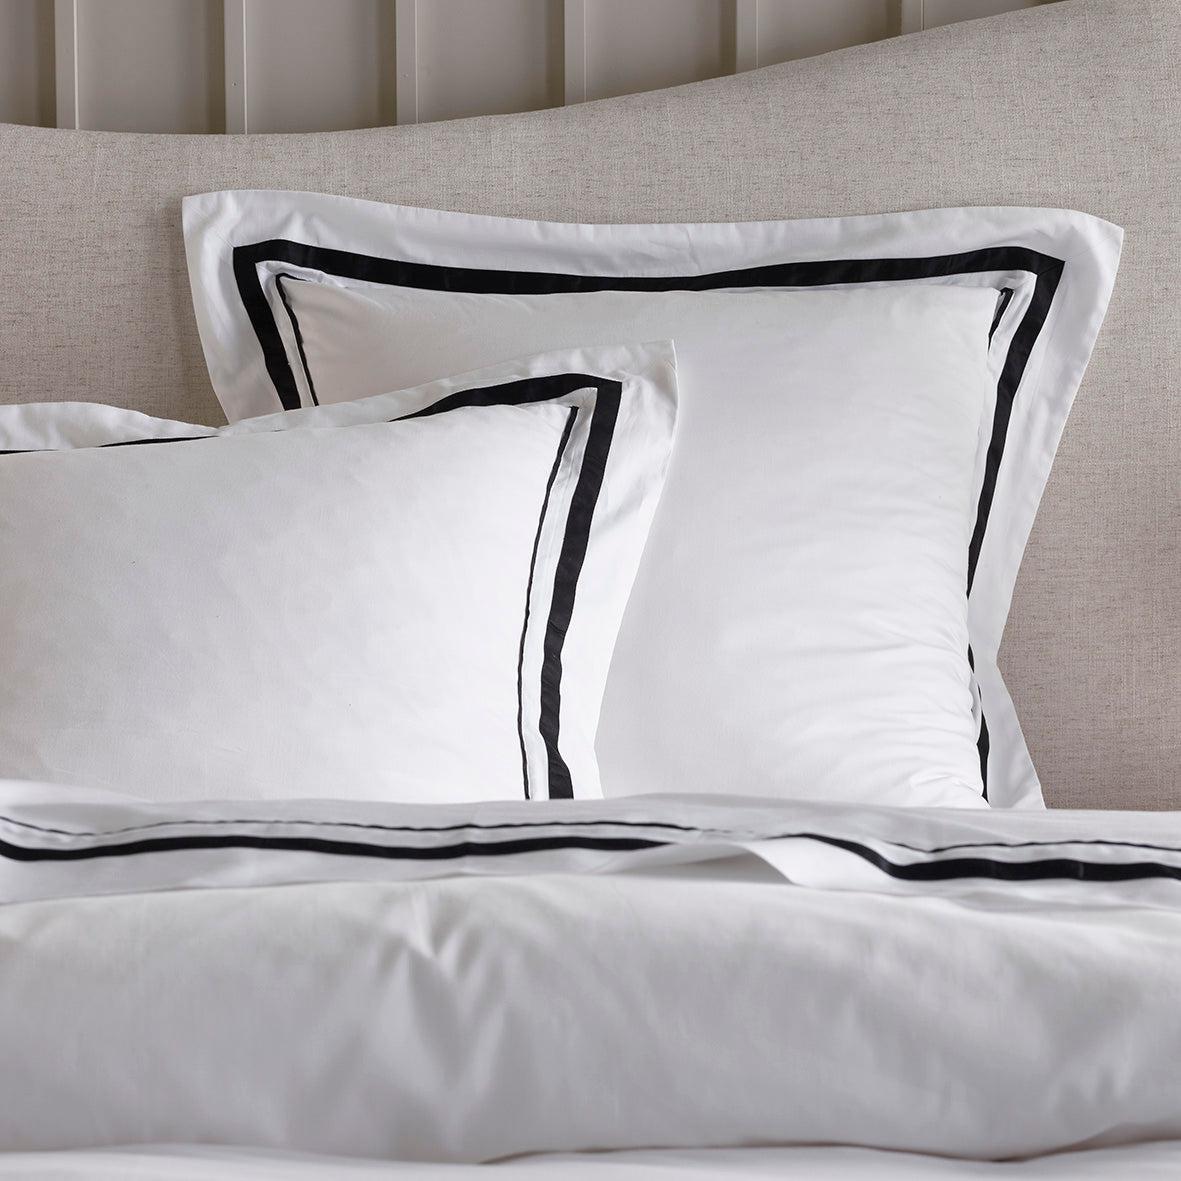 Organic Cotton European Pillowcase with Trim-European Pillowcase-LUXOTIC